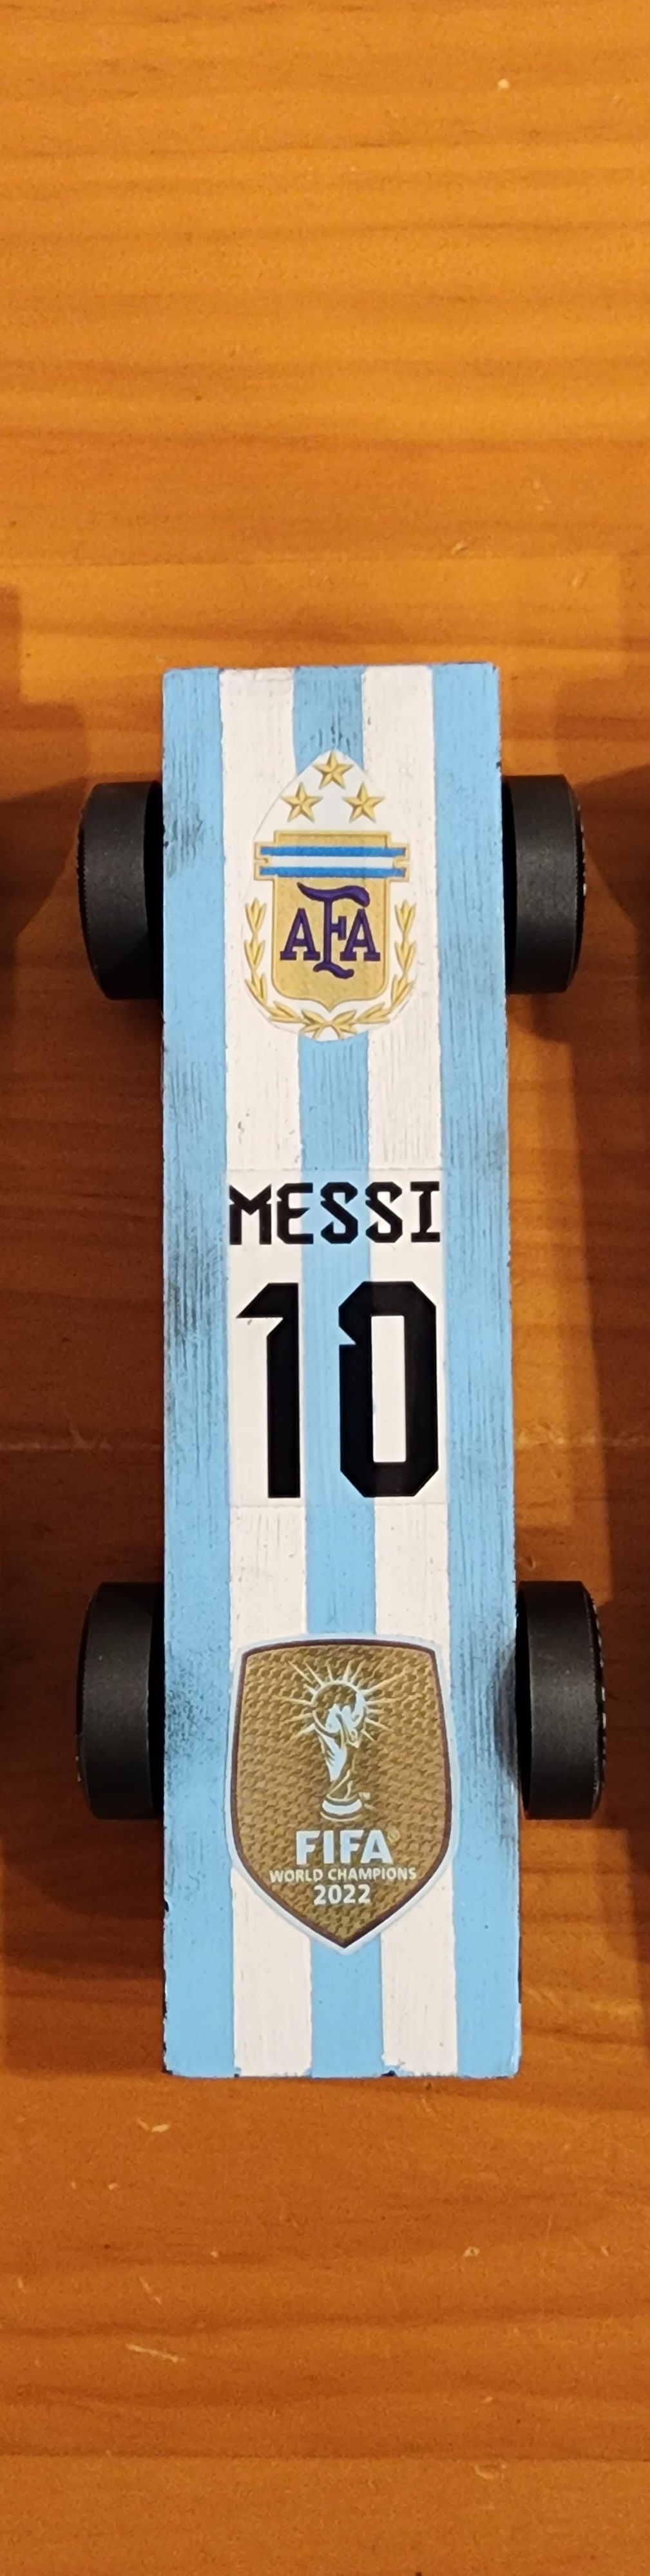 Messi the goat car